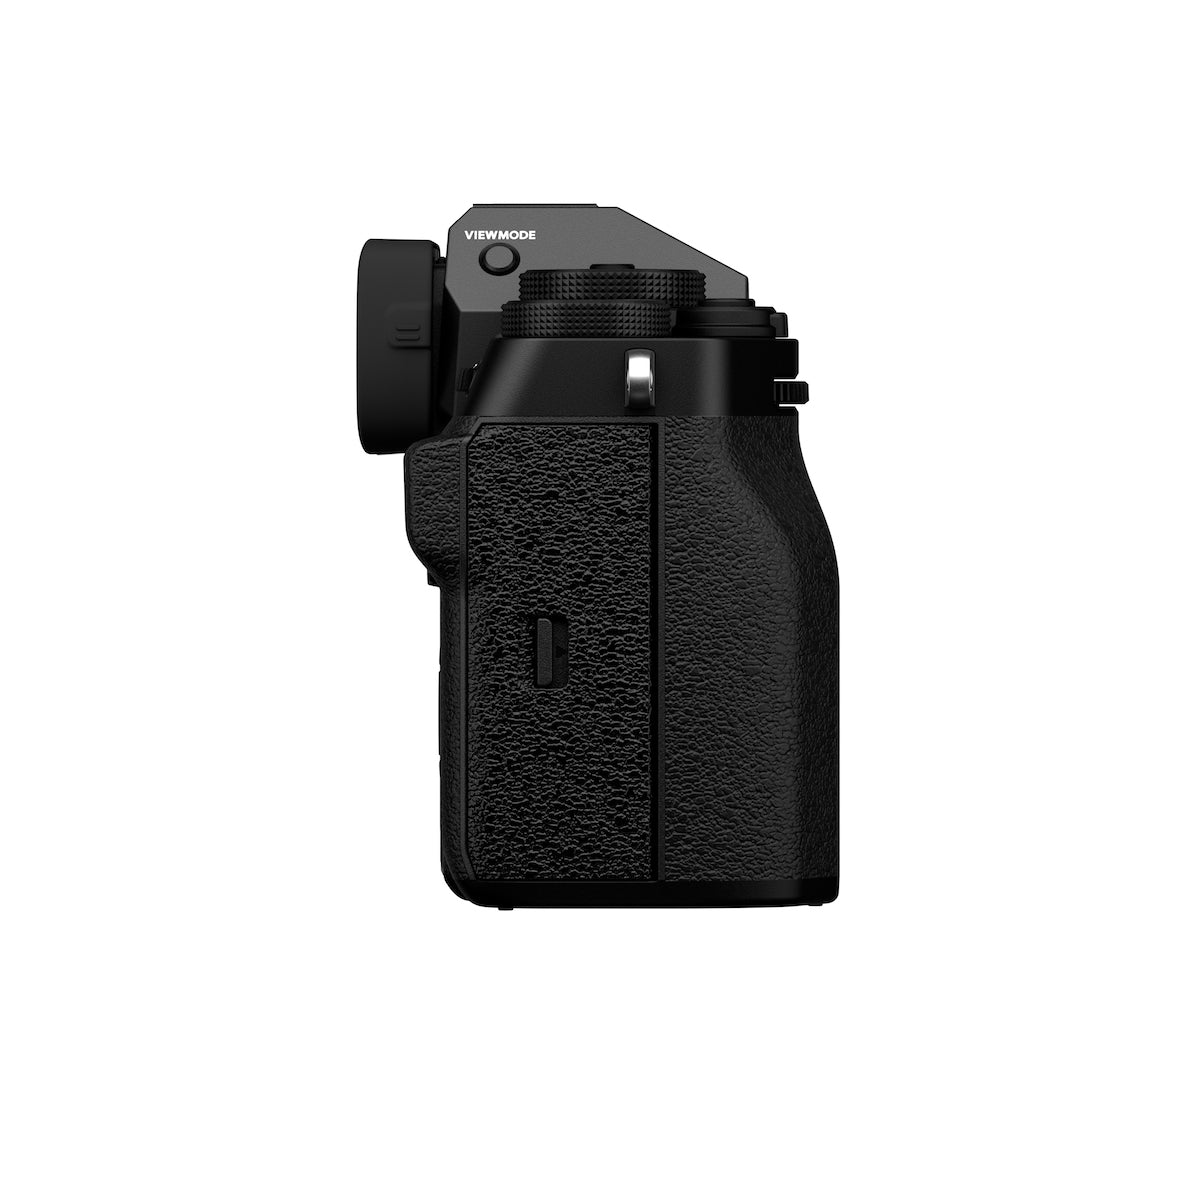 Fujifilm X-T5 Digital Camera Body (Black)